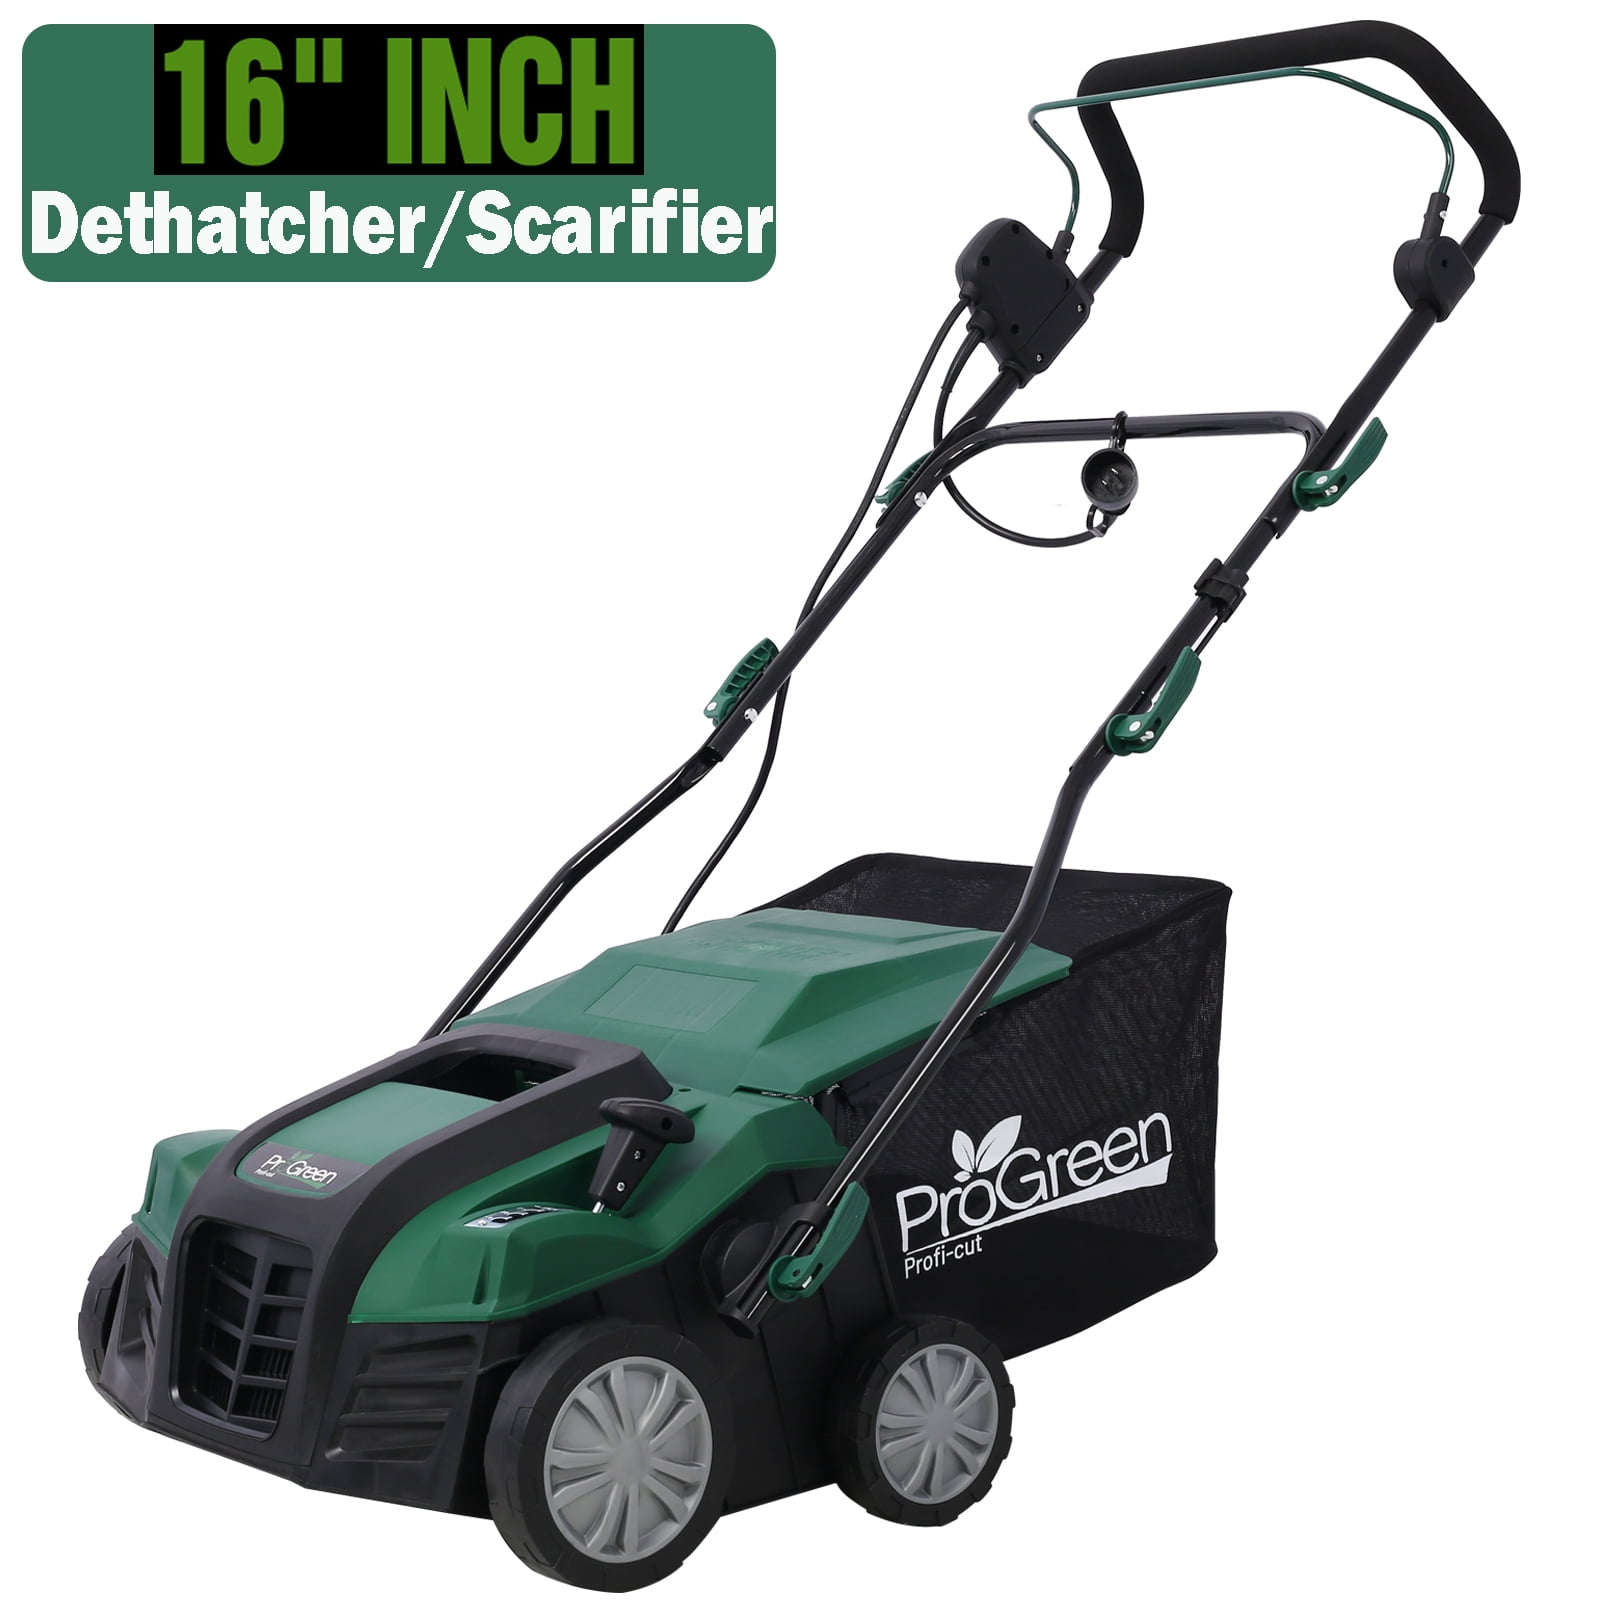 Seizeen 16-Inch Dethatcher & Scarifier, Powerful 15 Amp Electric Lawn ...